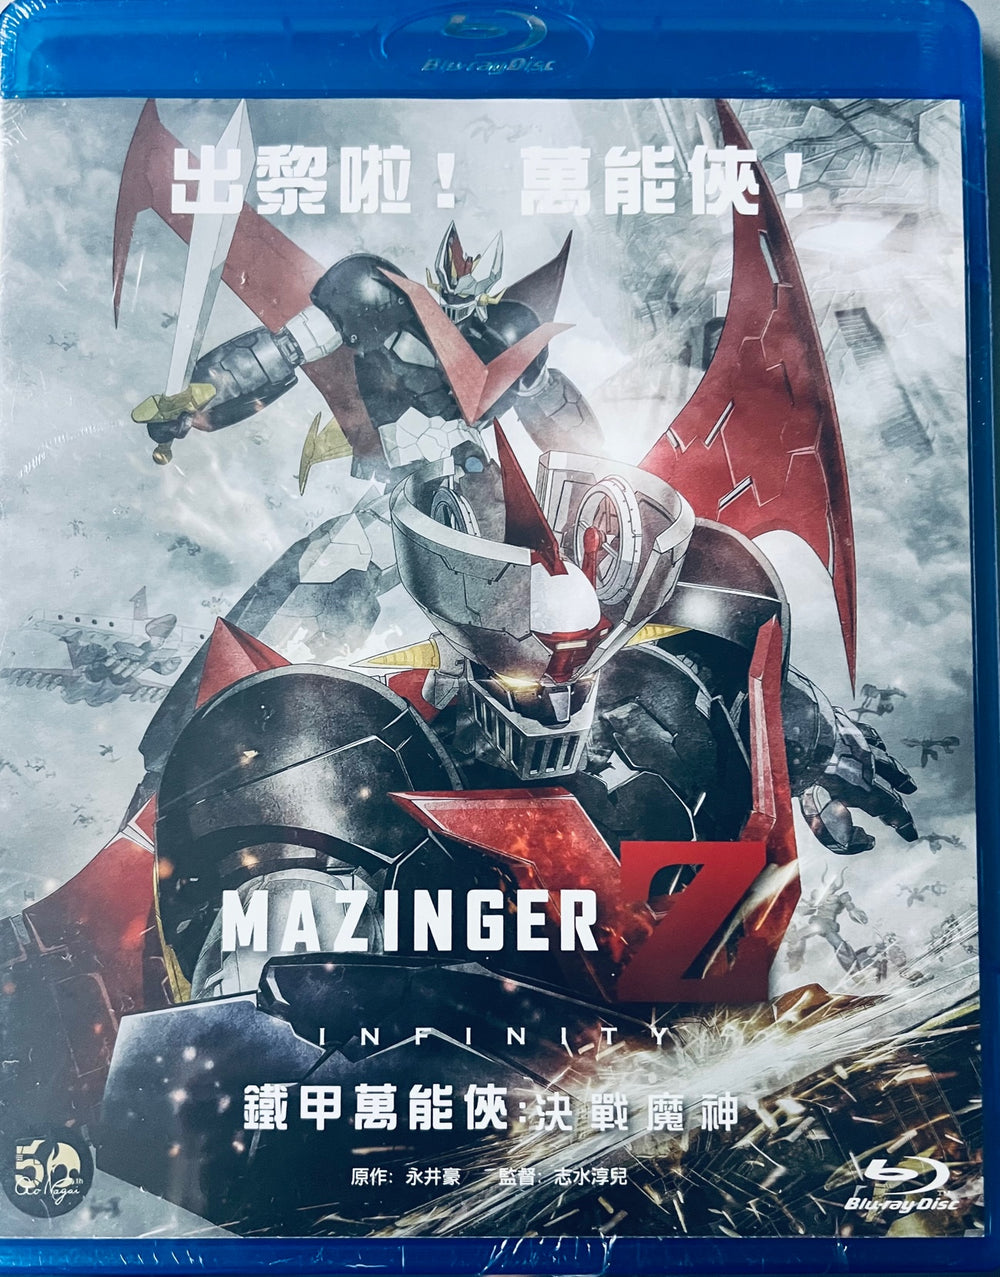 Mazinger Infinity 鐵甲萬能俠: 決戰魔神 2018 Japanese Anime (BLU-RAY) with English Subtitles (Region A)